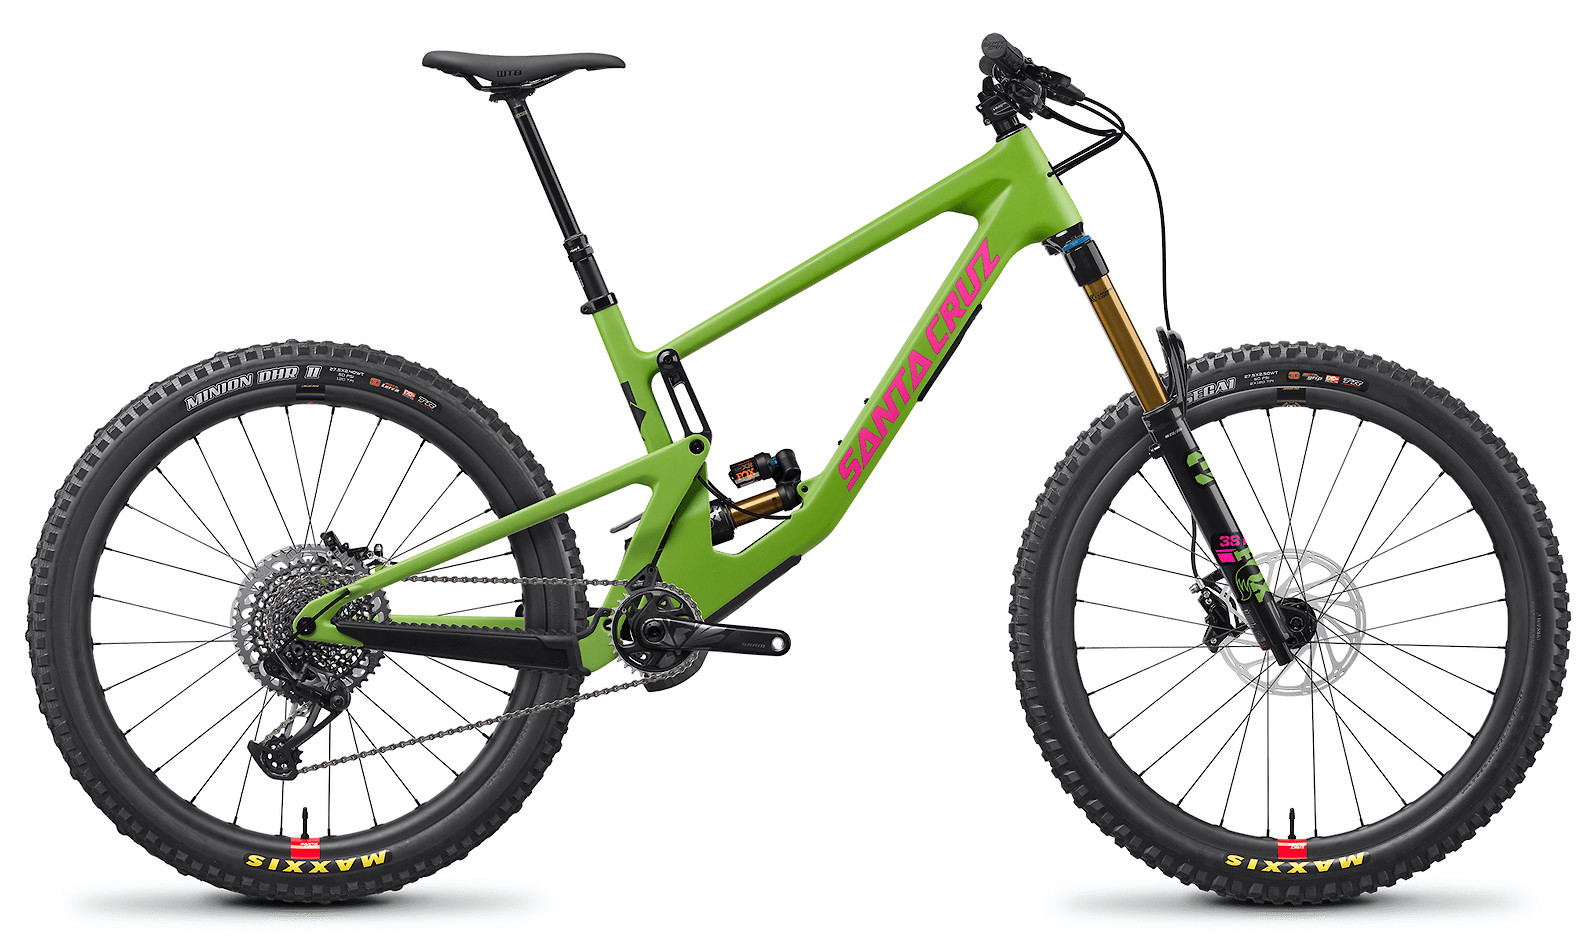 2021 Santa Cruz Nomad 5 X01 Reserve Carbon CC – Mountain bike